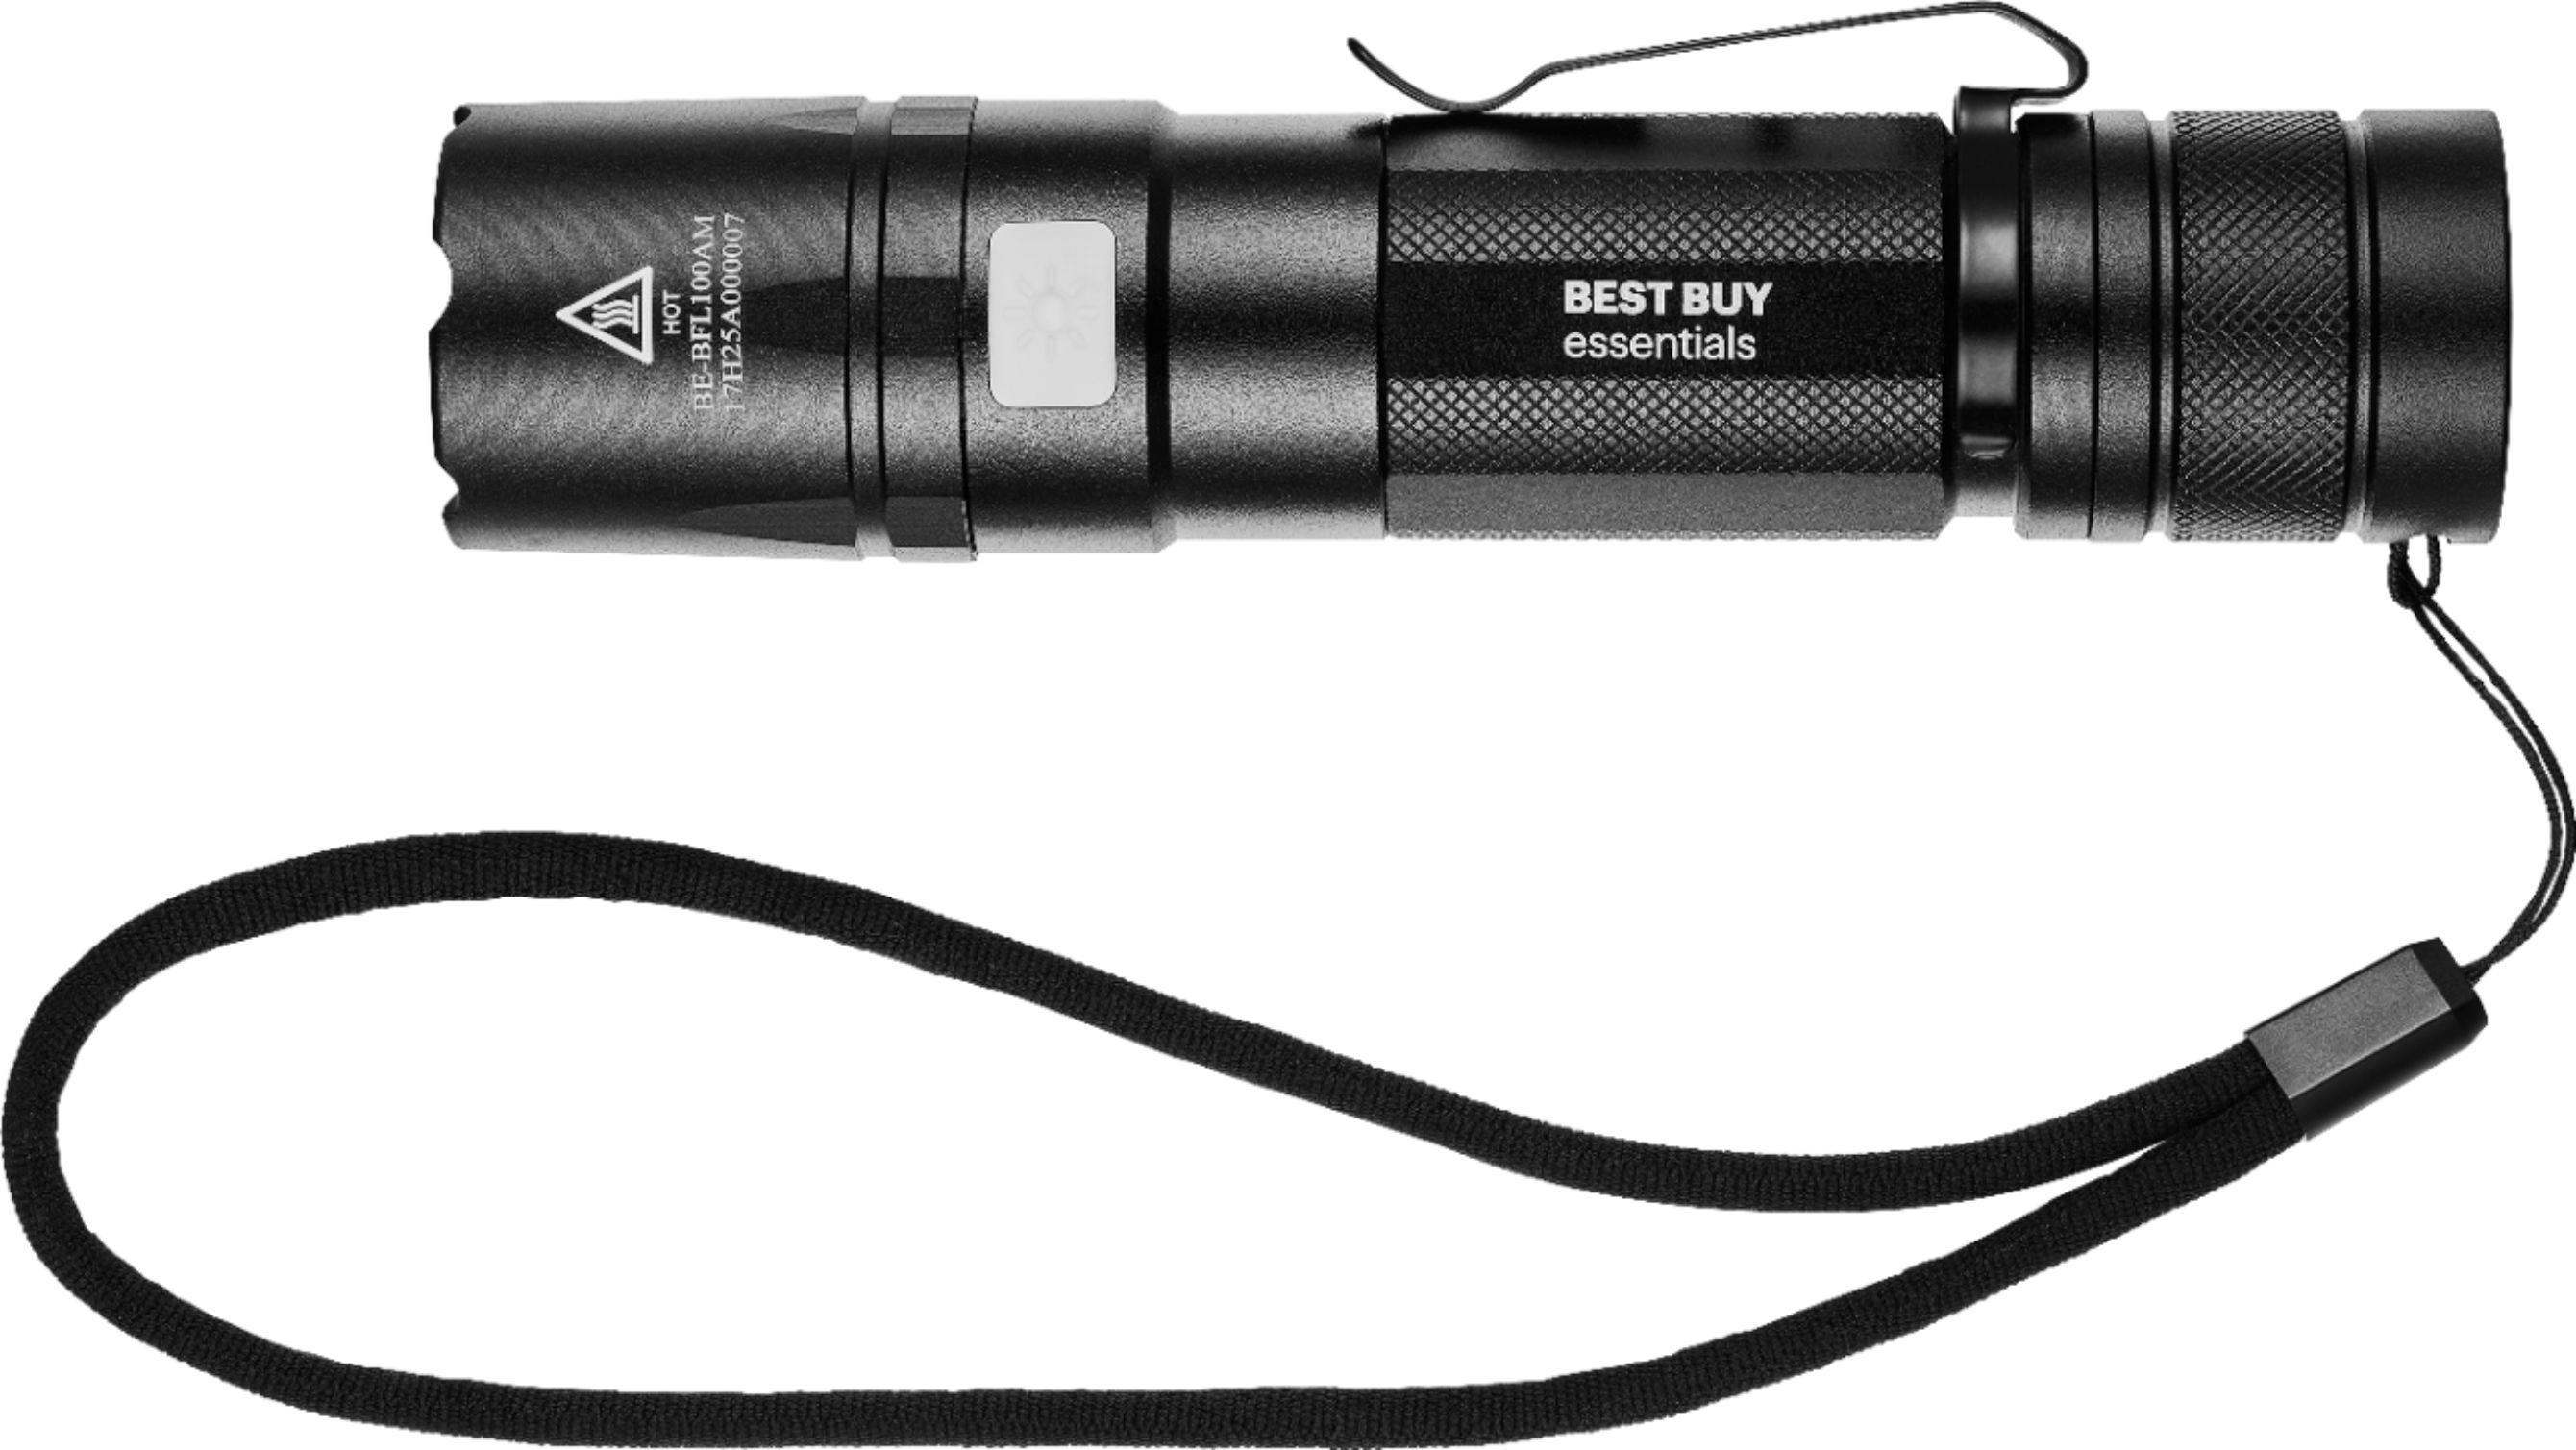 Atomic Beam USA Telebrands 1200 lumens Black LED Flashlight AAA Battery